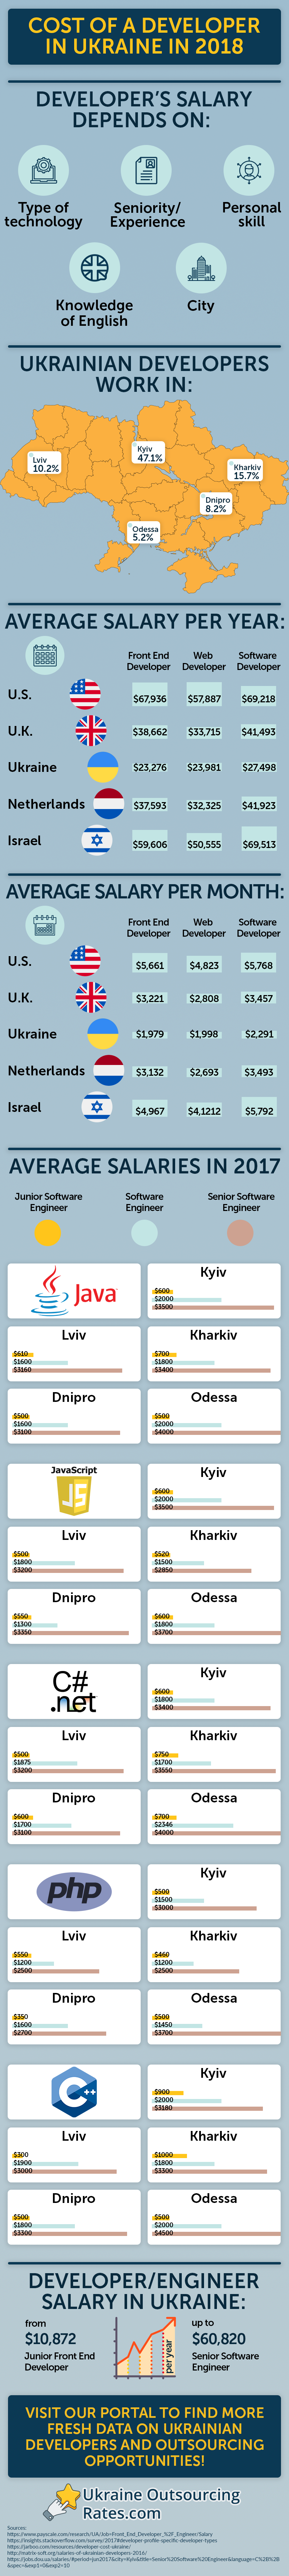 cost of a developer in ukraine in 2018